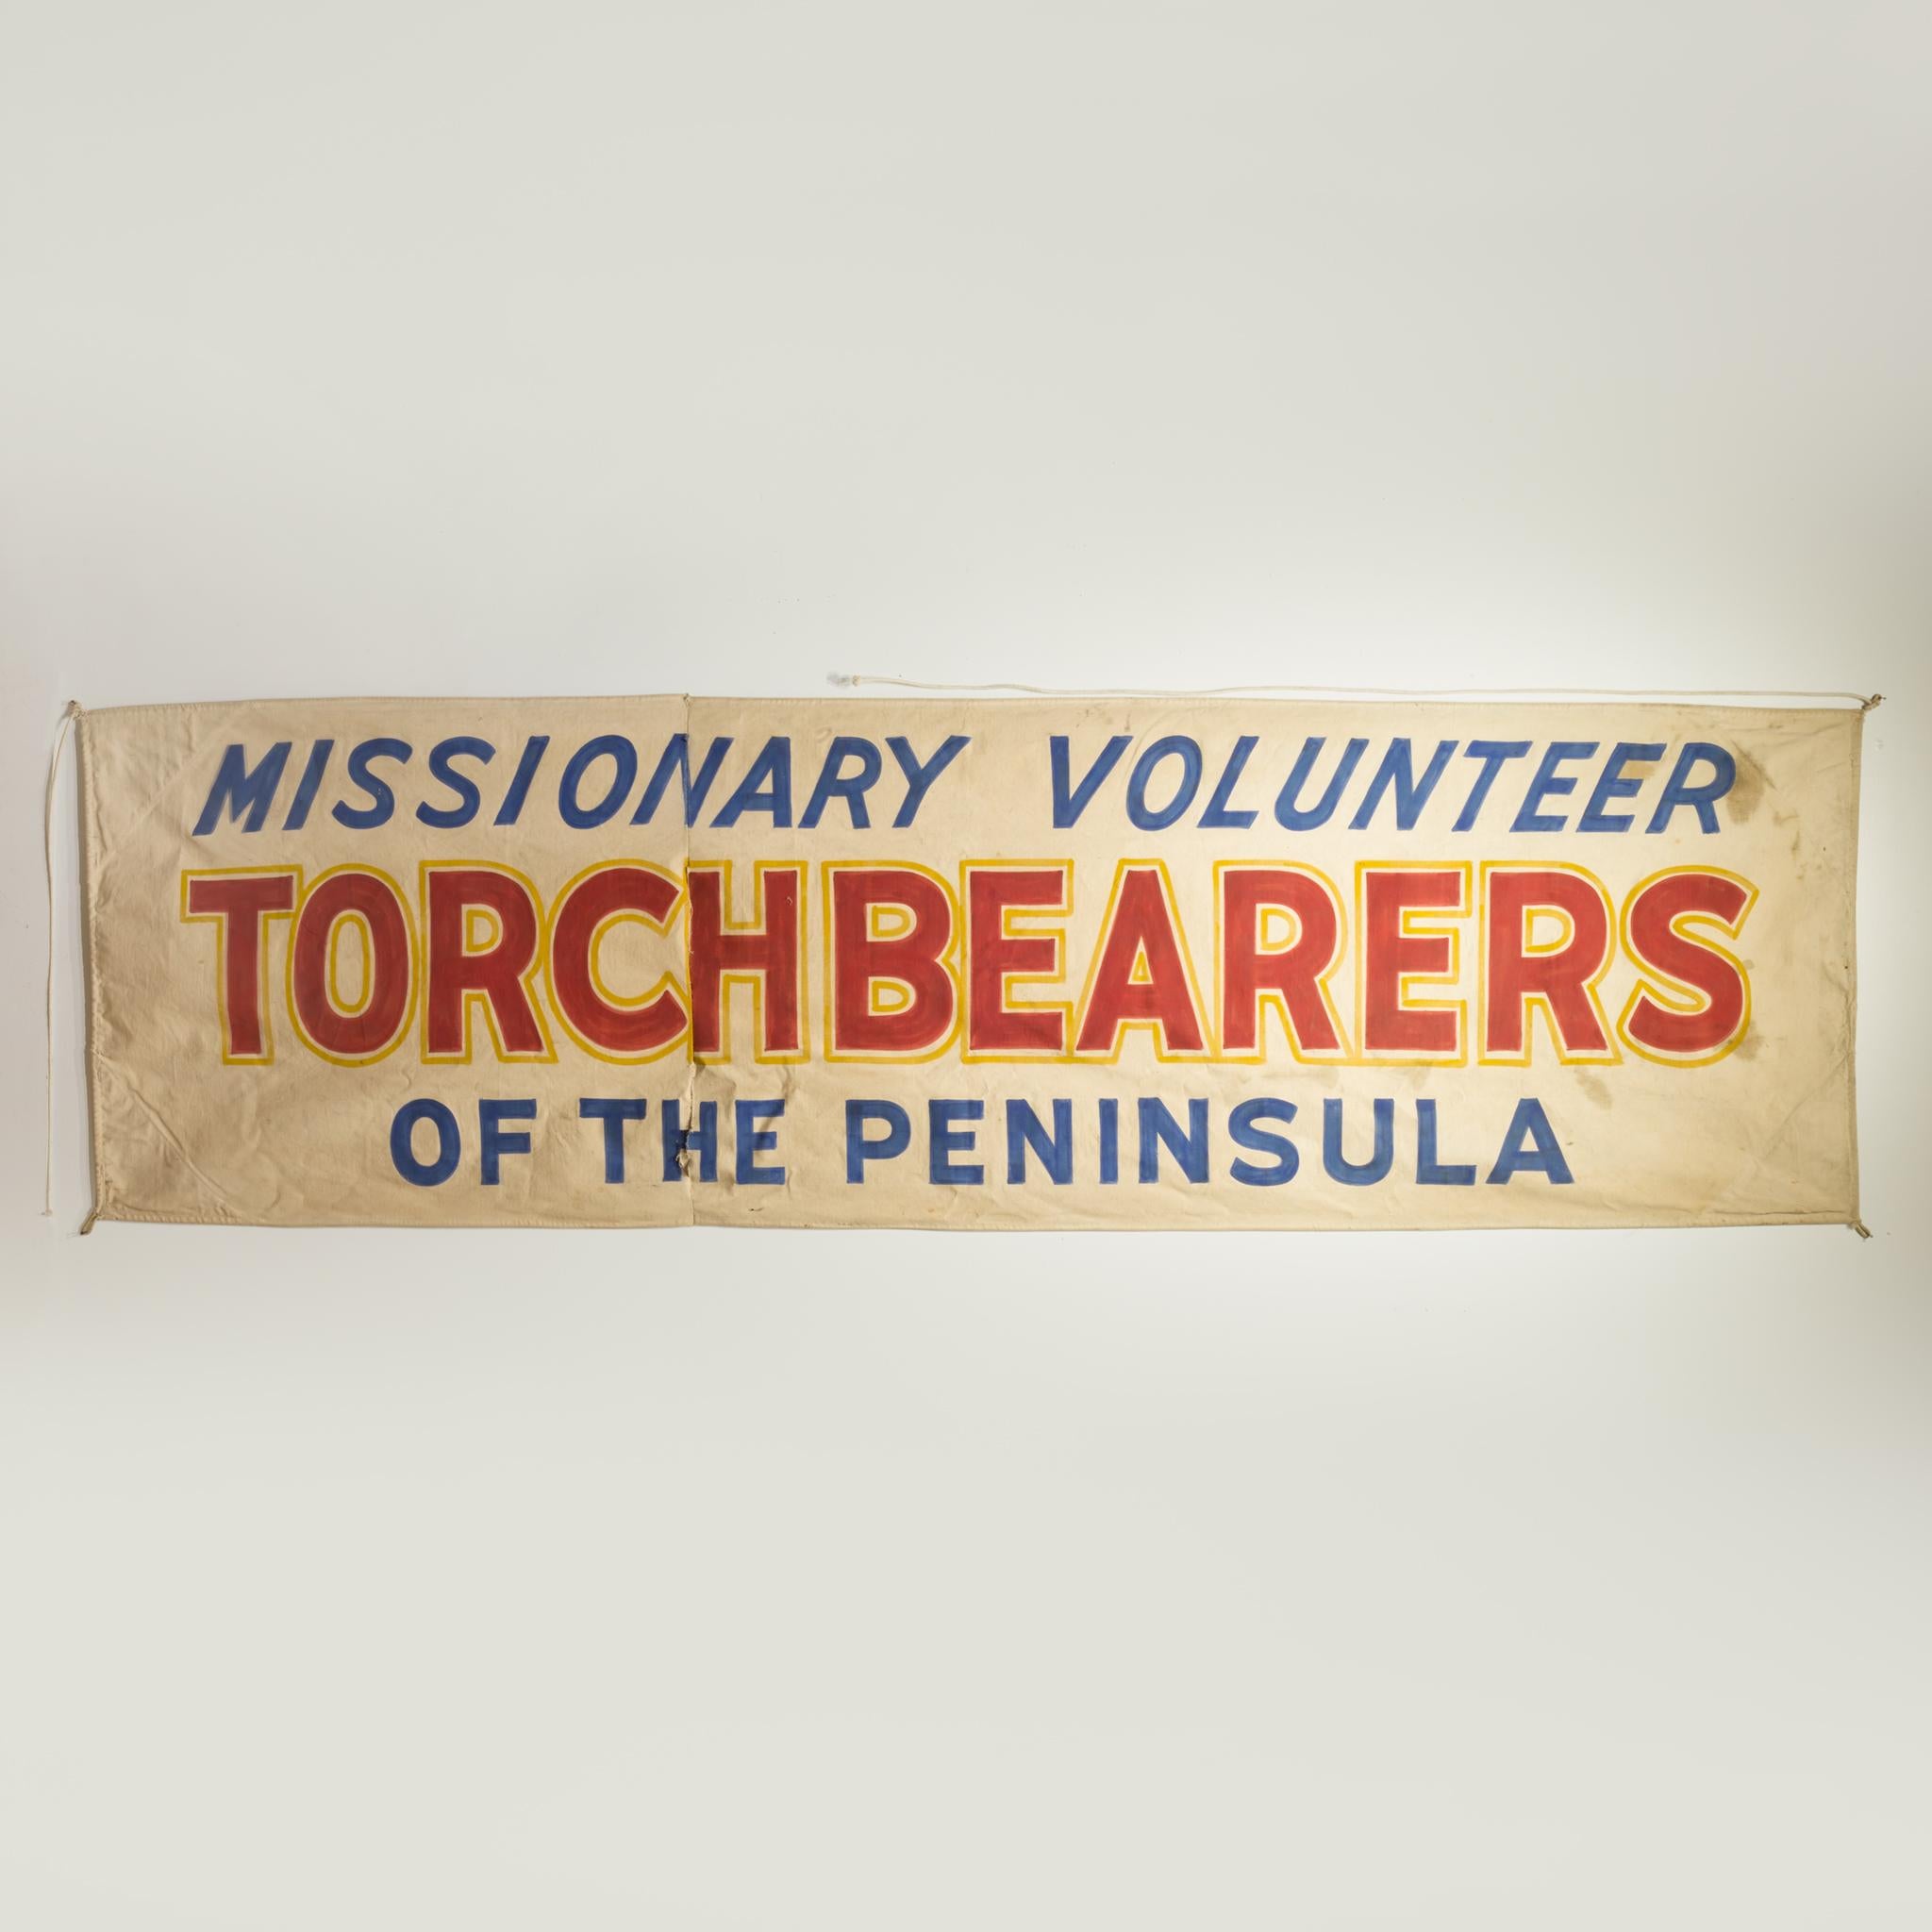 1940s banner